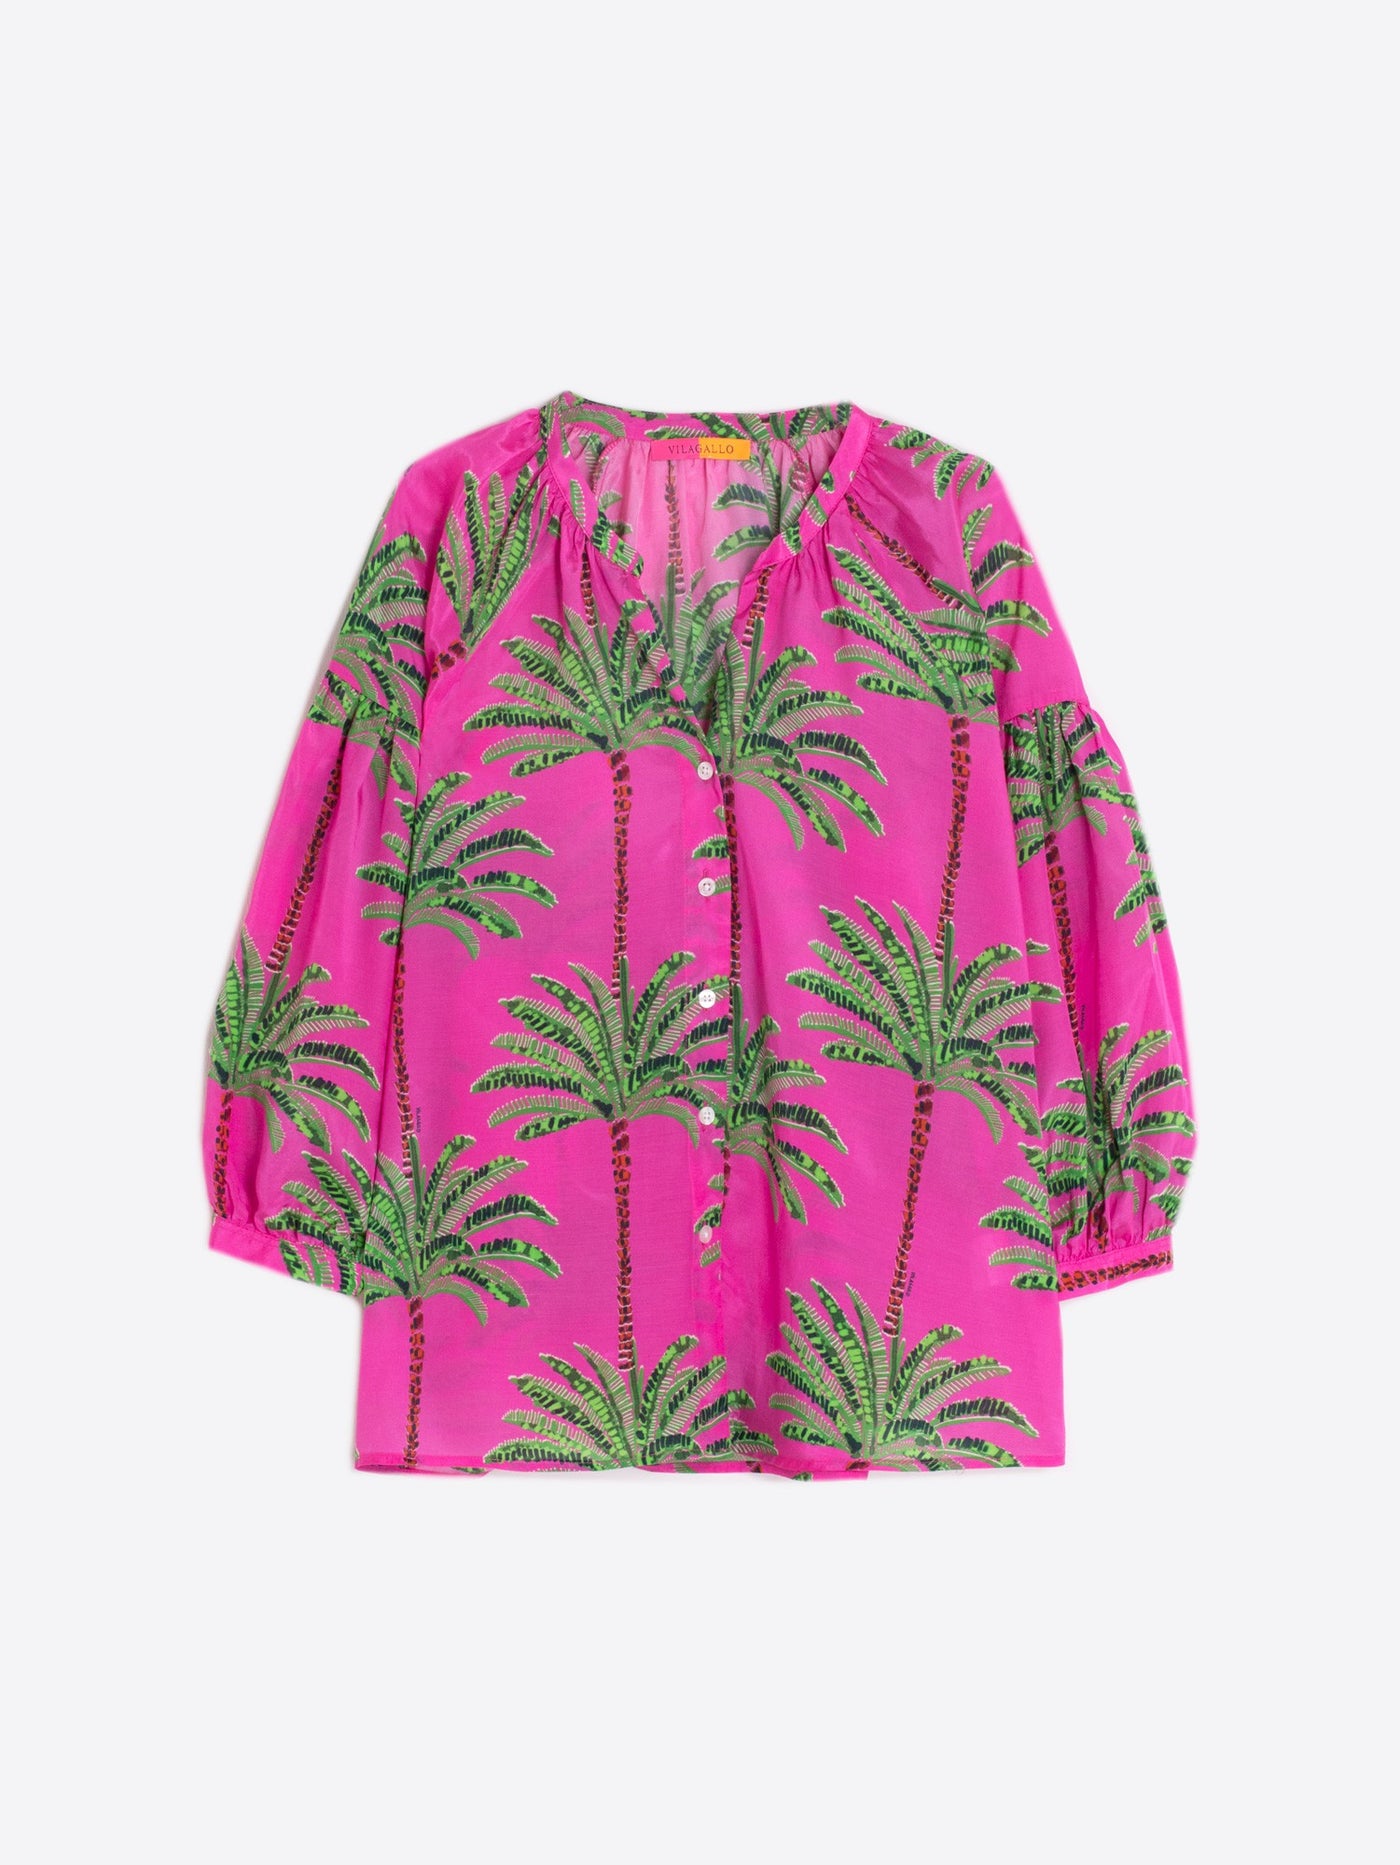 Vilagallo Mabel Palm Print Pink Blouse